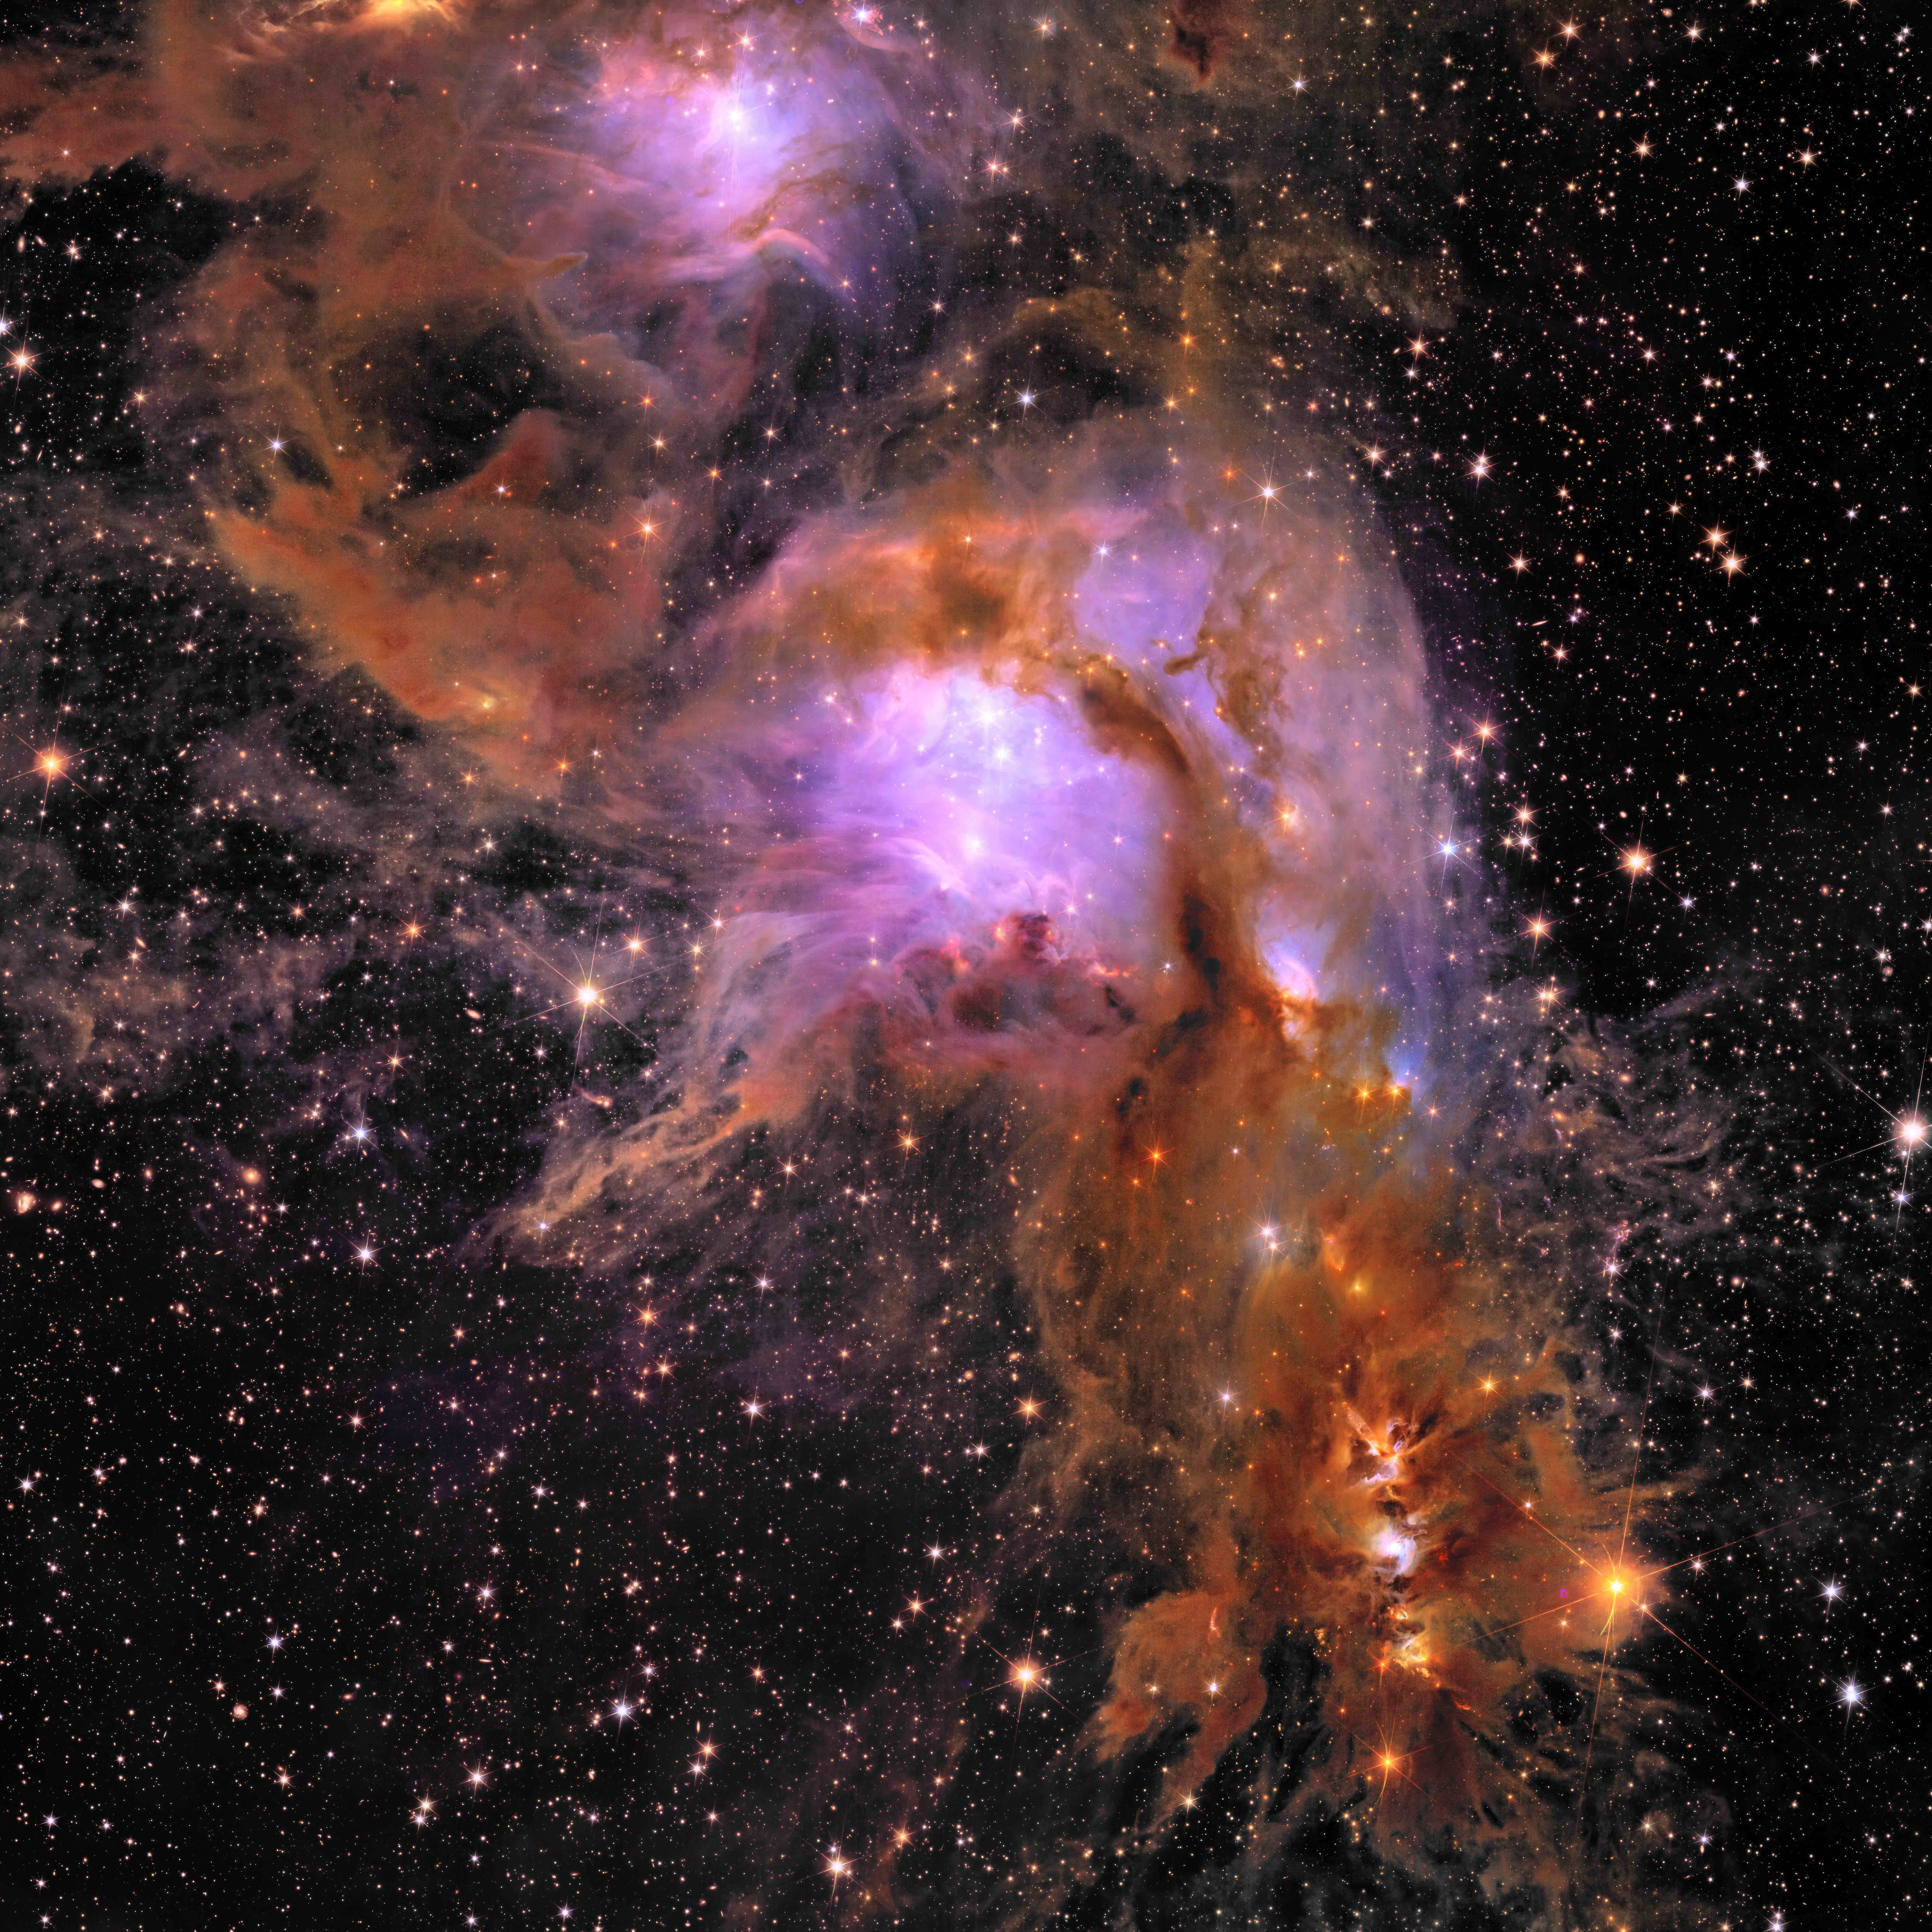 Euclid_s_new_image_of_star-forming_region_Messier_78.jpg